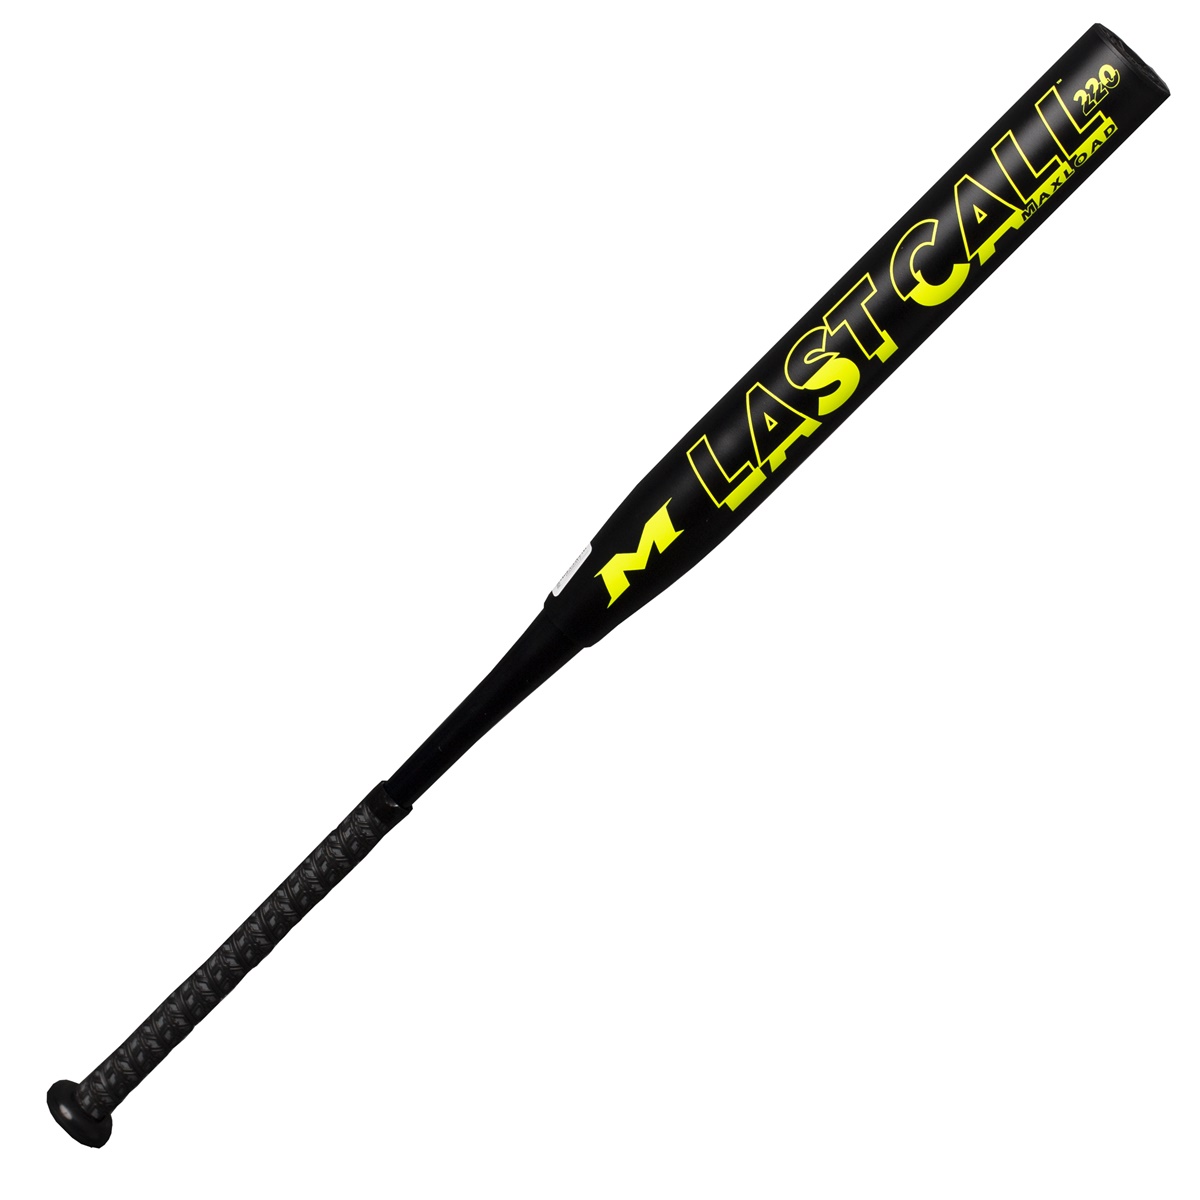 miken-last-call-14-barrel-maxload-usssa-slowpitch-softball-bat-34-inch-26-oz MLC14U-3-26 Miken 658925045509 Dont miss out on the 2021 Last Call Maxload USSSA bat!